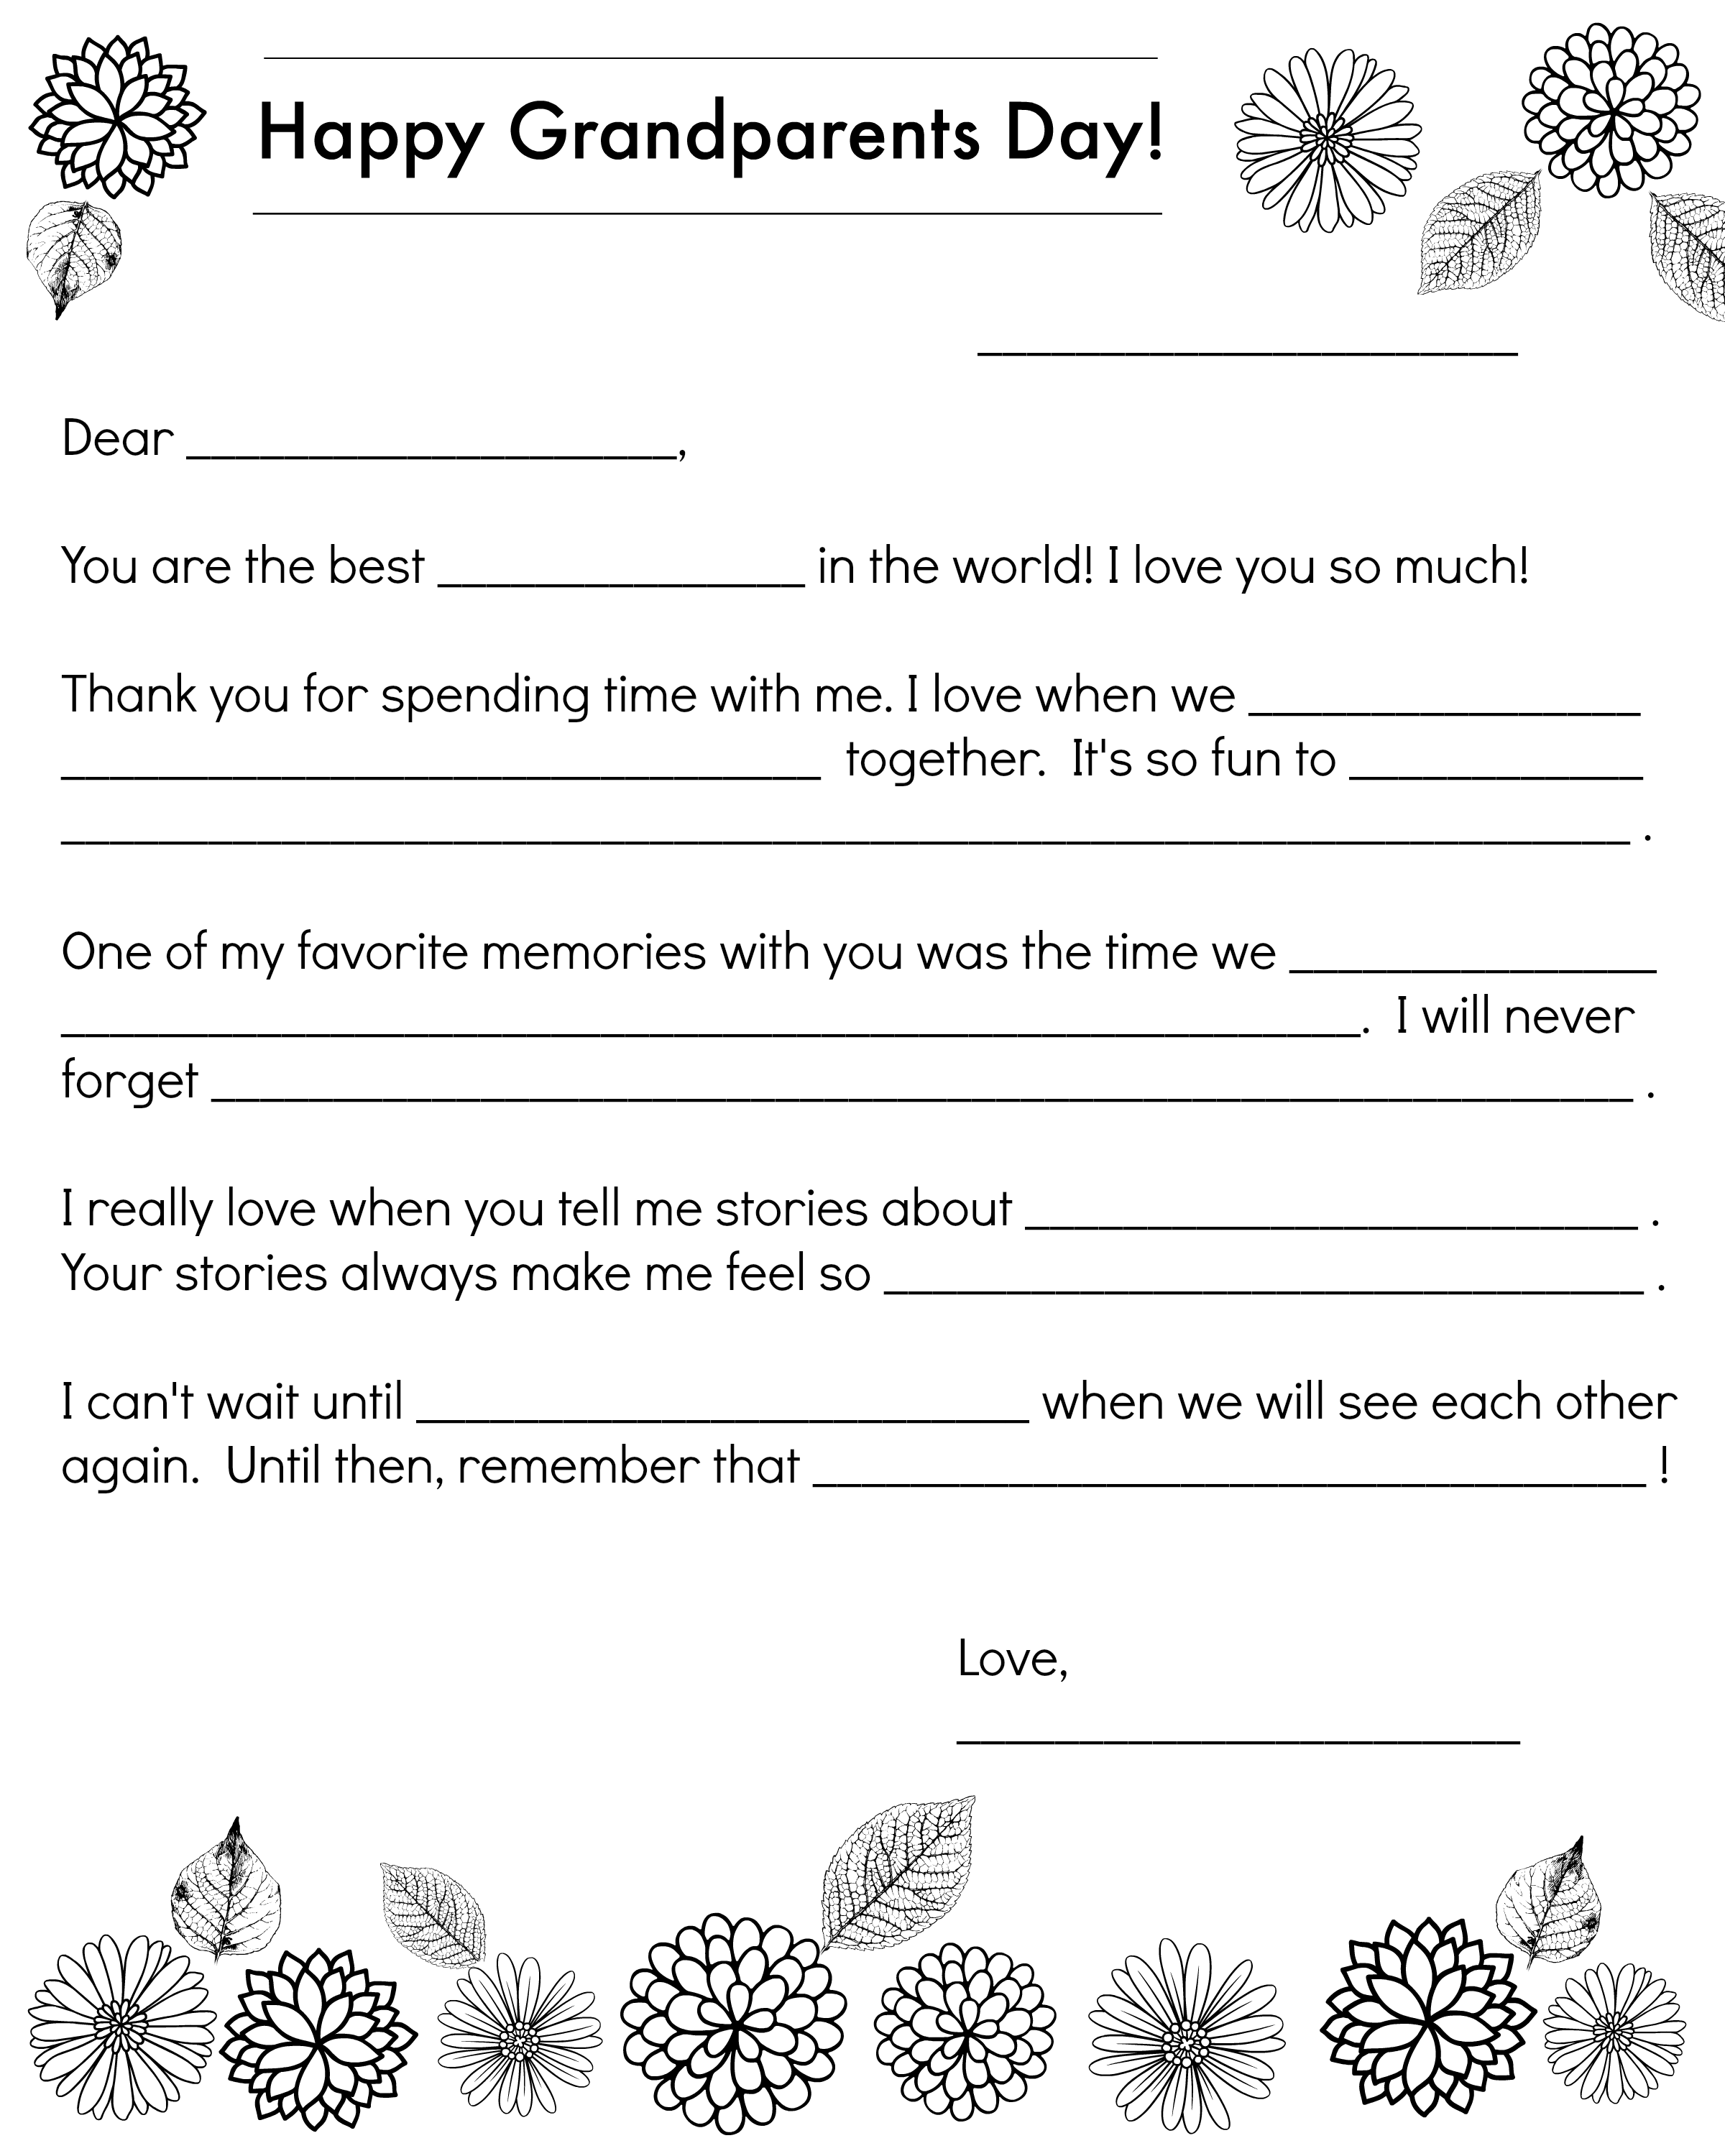 Free Printable: A Letter to Grandparents | Scholastic | Parents